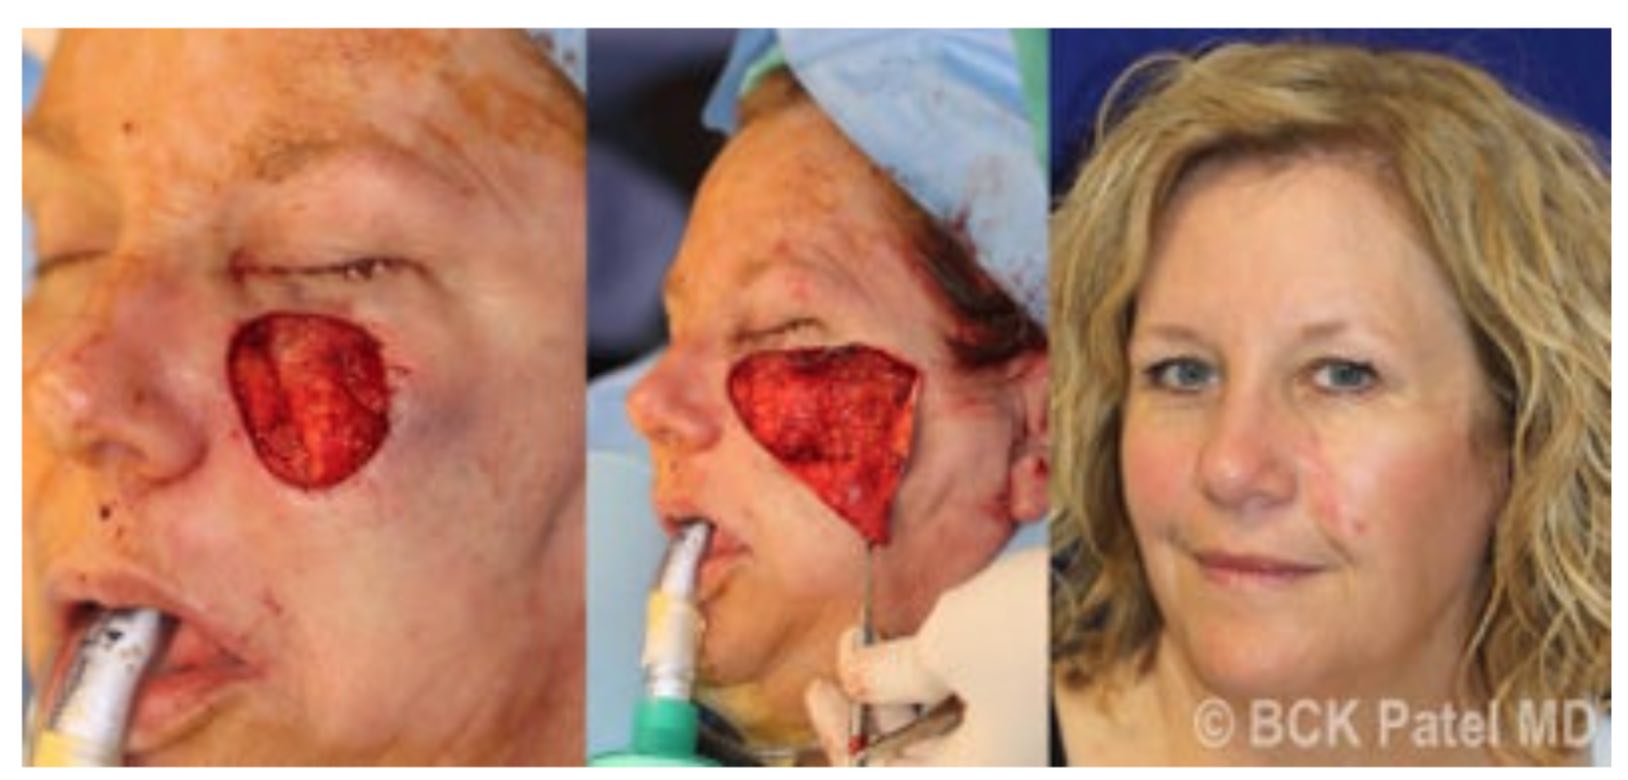 Facial melanoma reconstruction by Dr. BCK Patel MD, FRCS